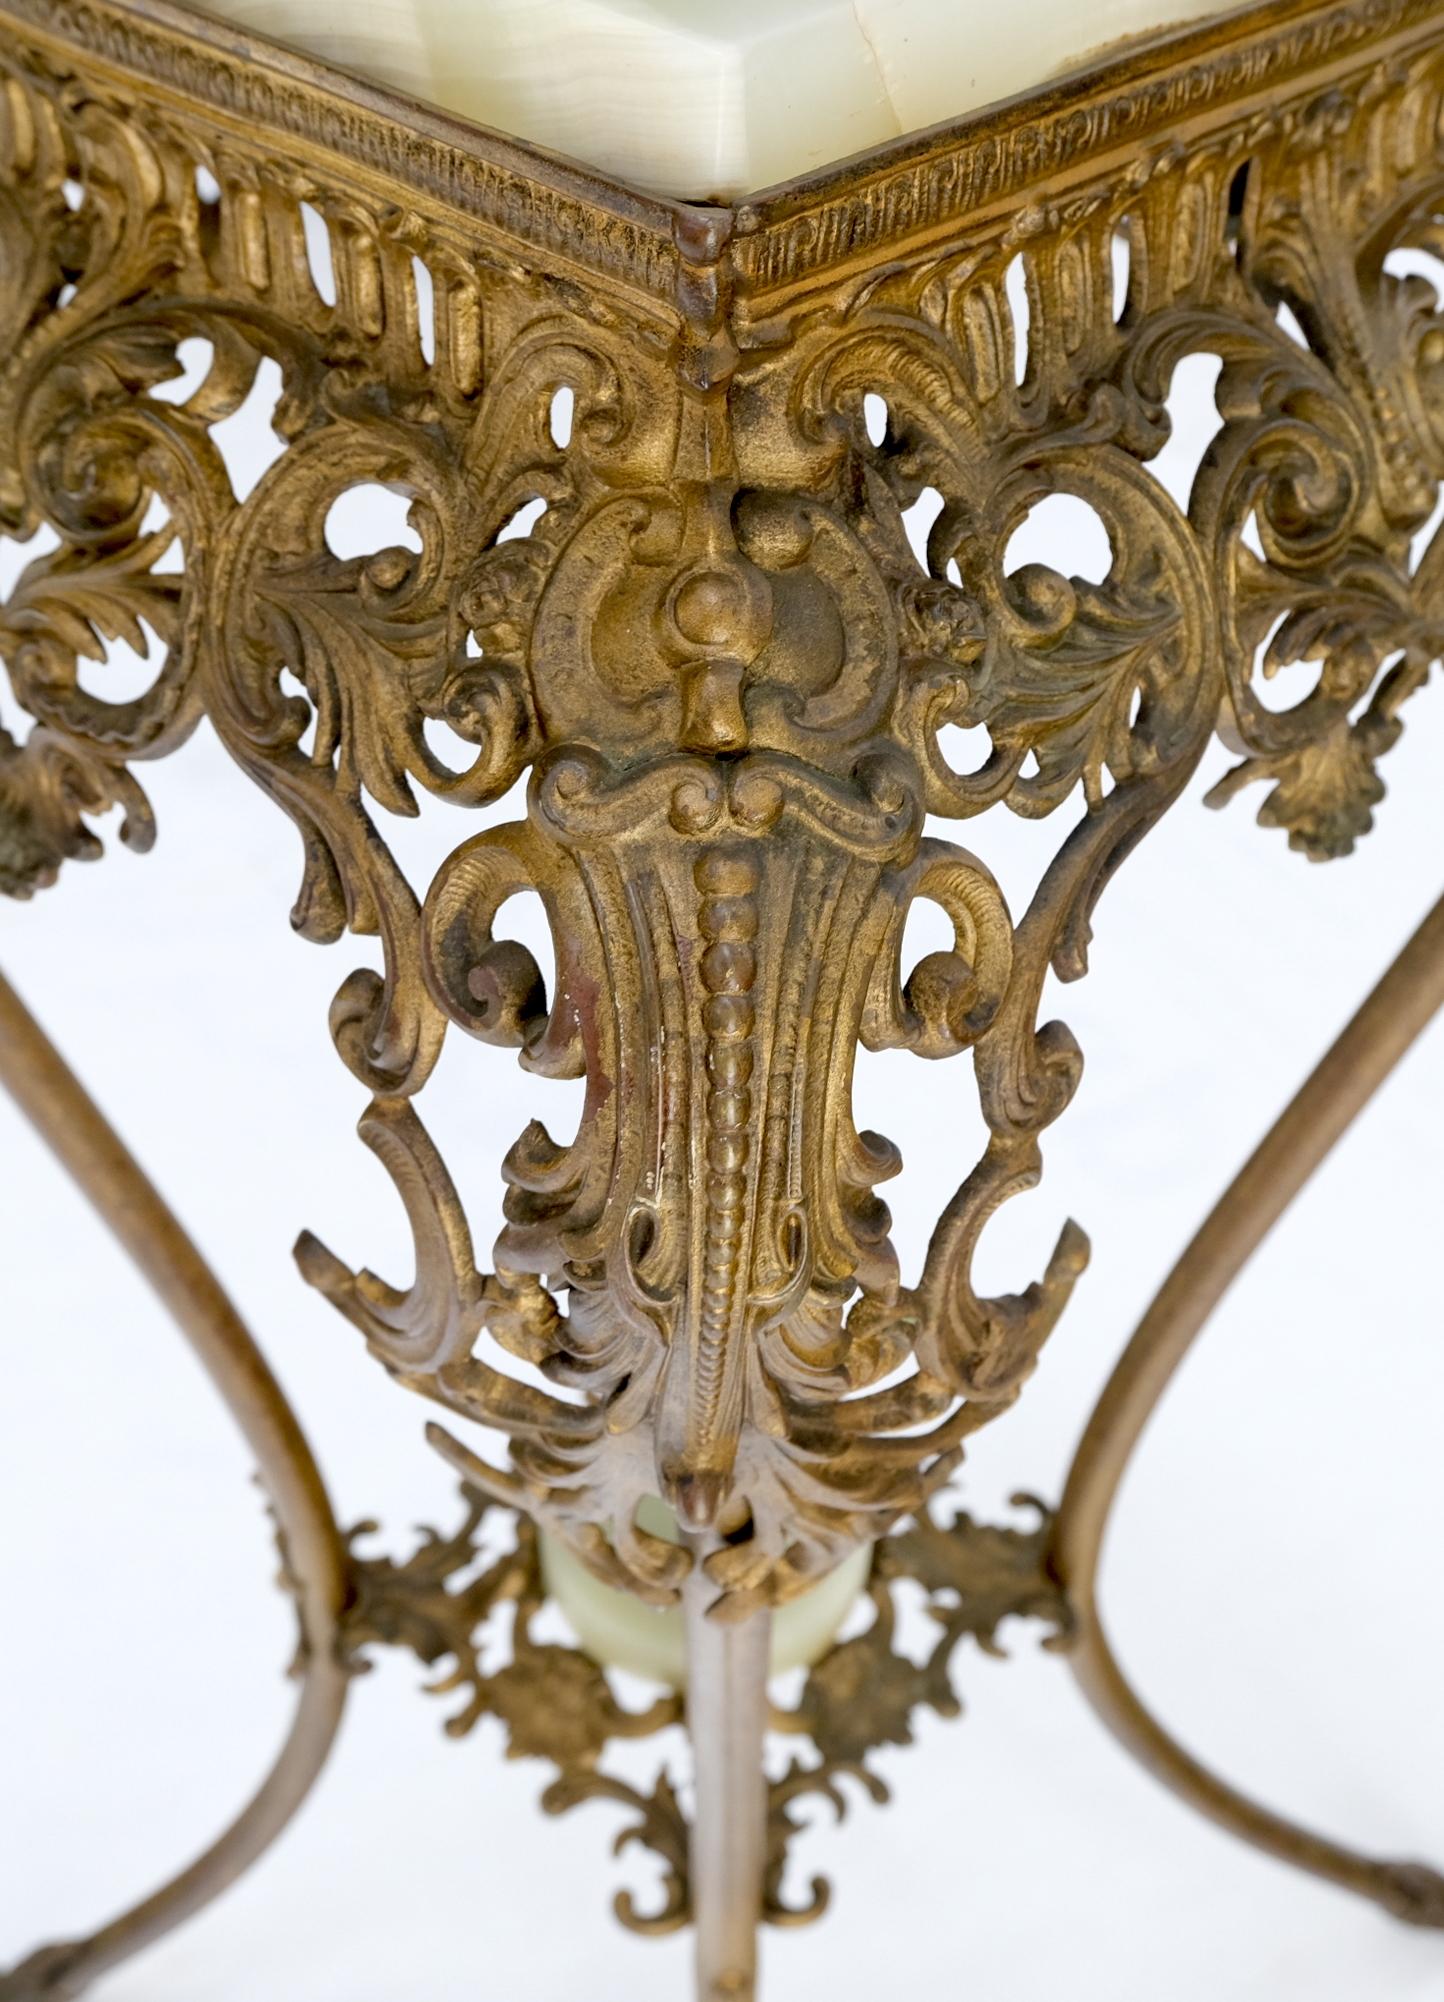 Onyx top ornate fine gilt brass base lamp table stand pedestal.